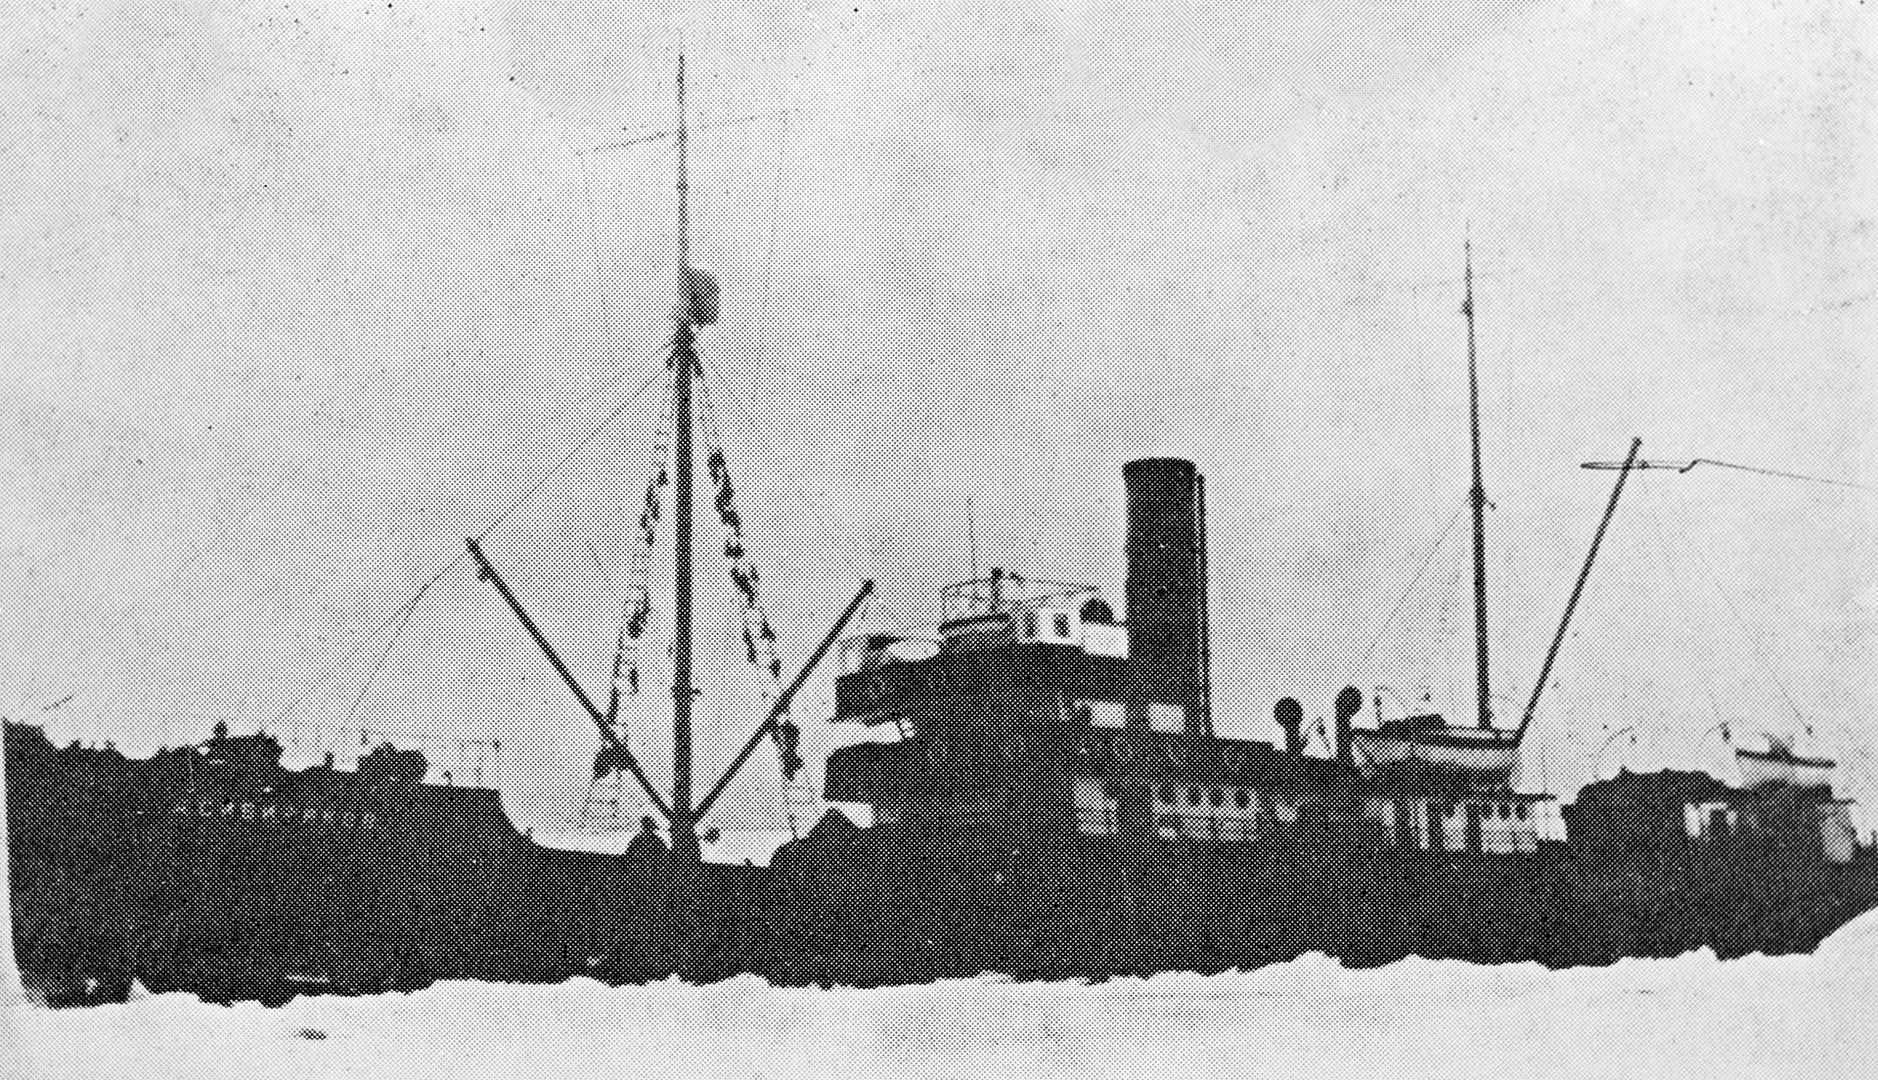 The Alexander Sibiryakov icebreaker which was named in honor of a Russian industrialist Alexander Sibiryakov [1849-1933] 